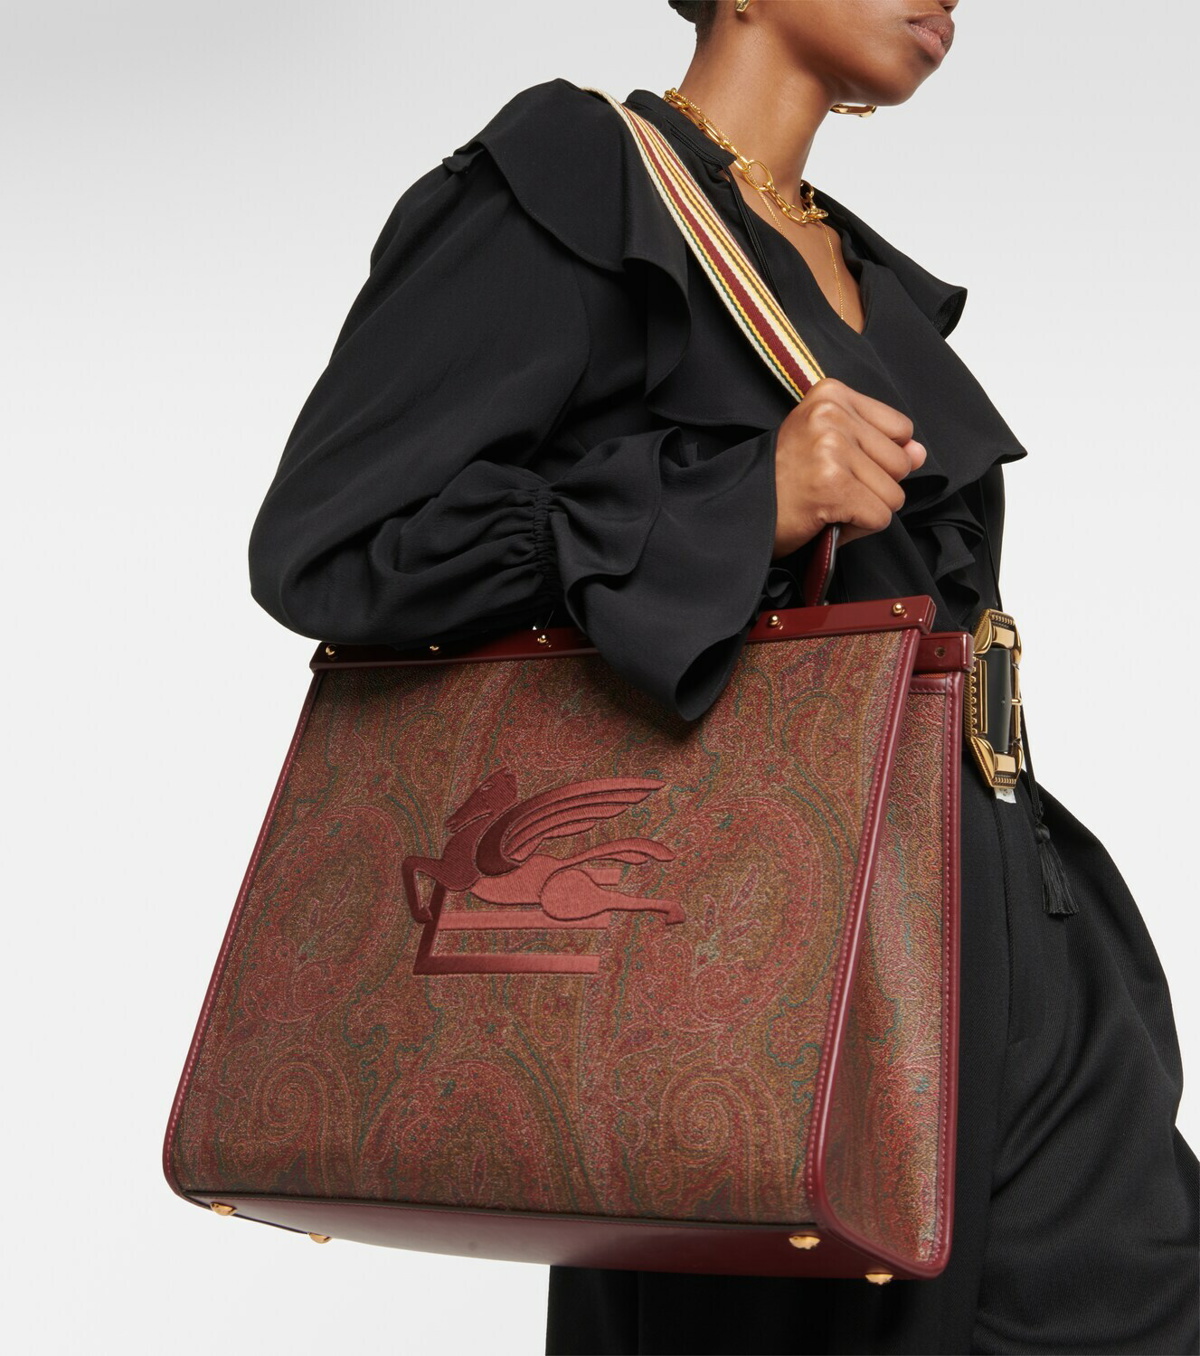 Love Trotter Mini Jacquard Tote Bag in Red - Etro